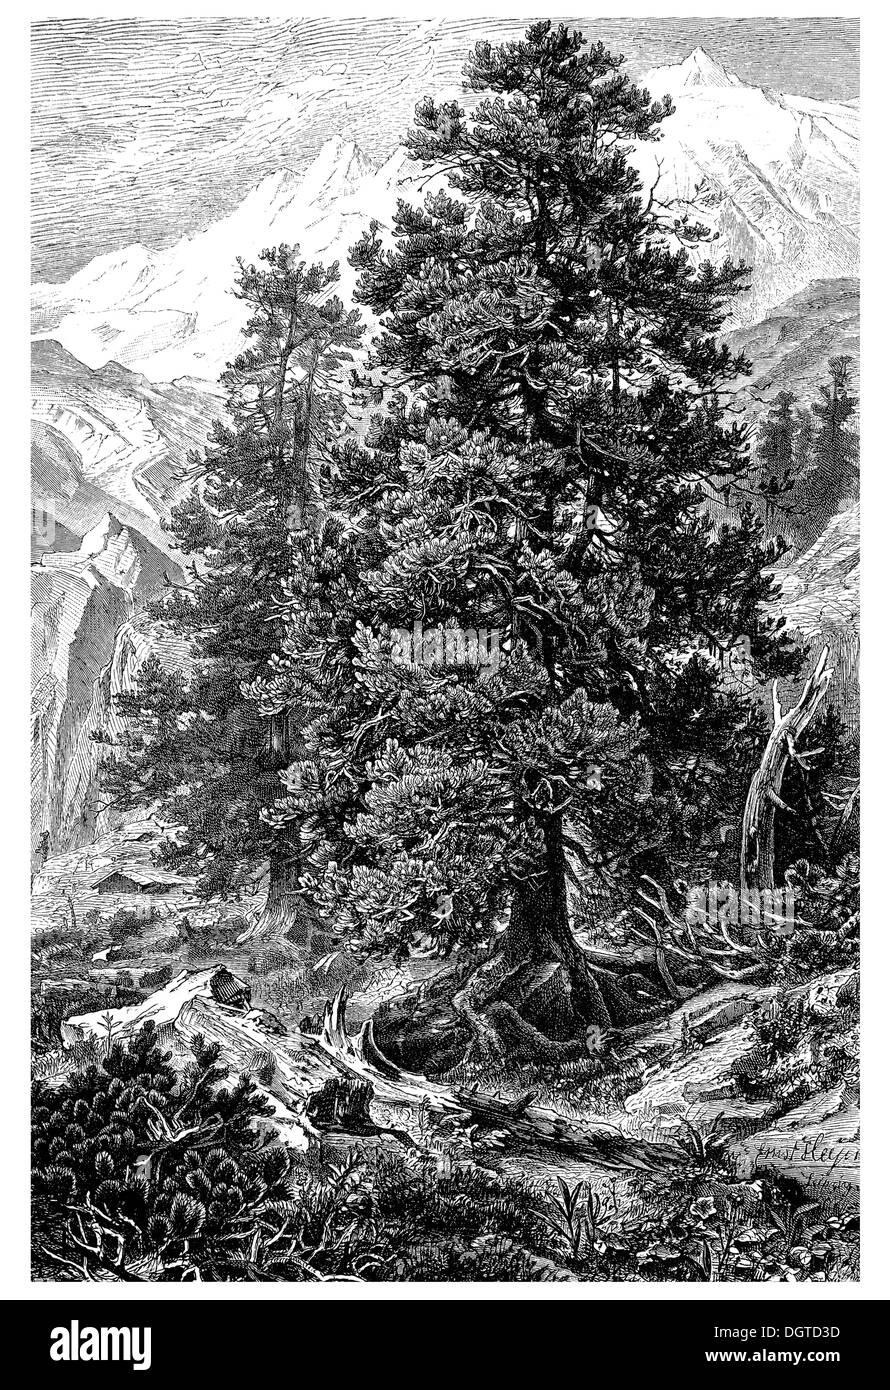 Display grafico I, pino cembro o Arolla pine (Pinus cembra L.), Illustrazione, Meyers Konversations-Lexikon enciclopedia, 1897 Foto Stock